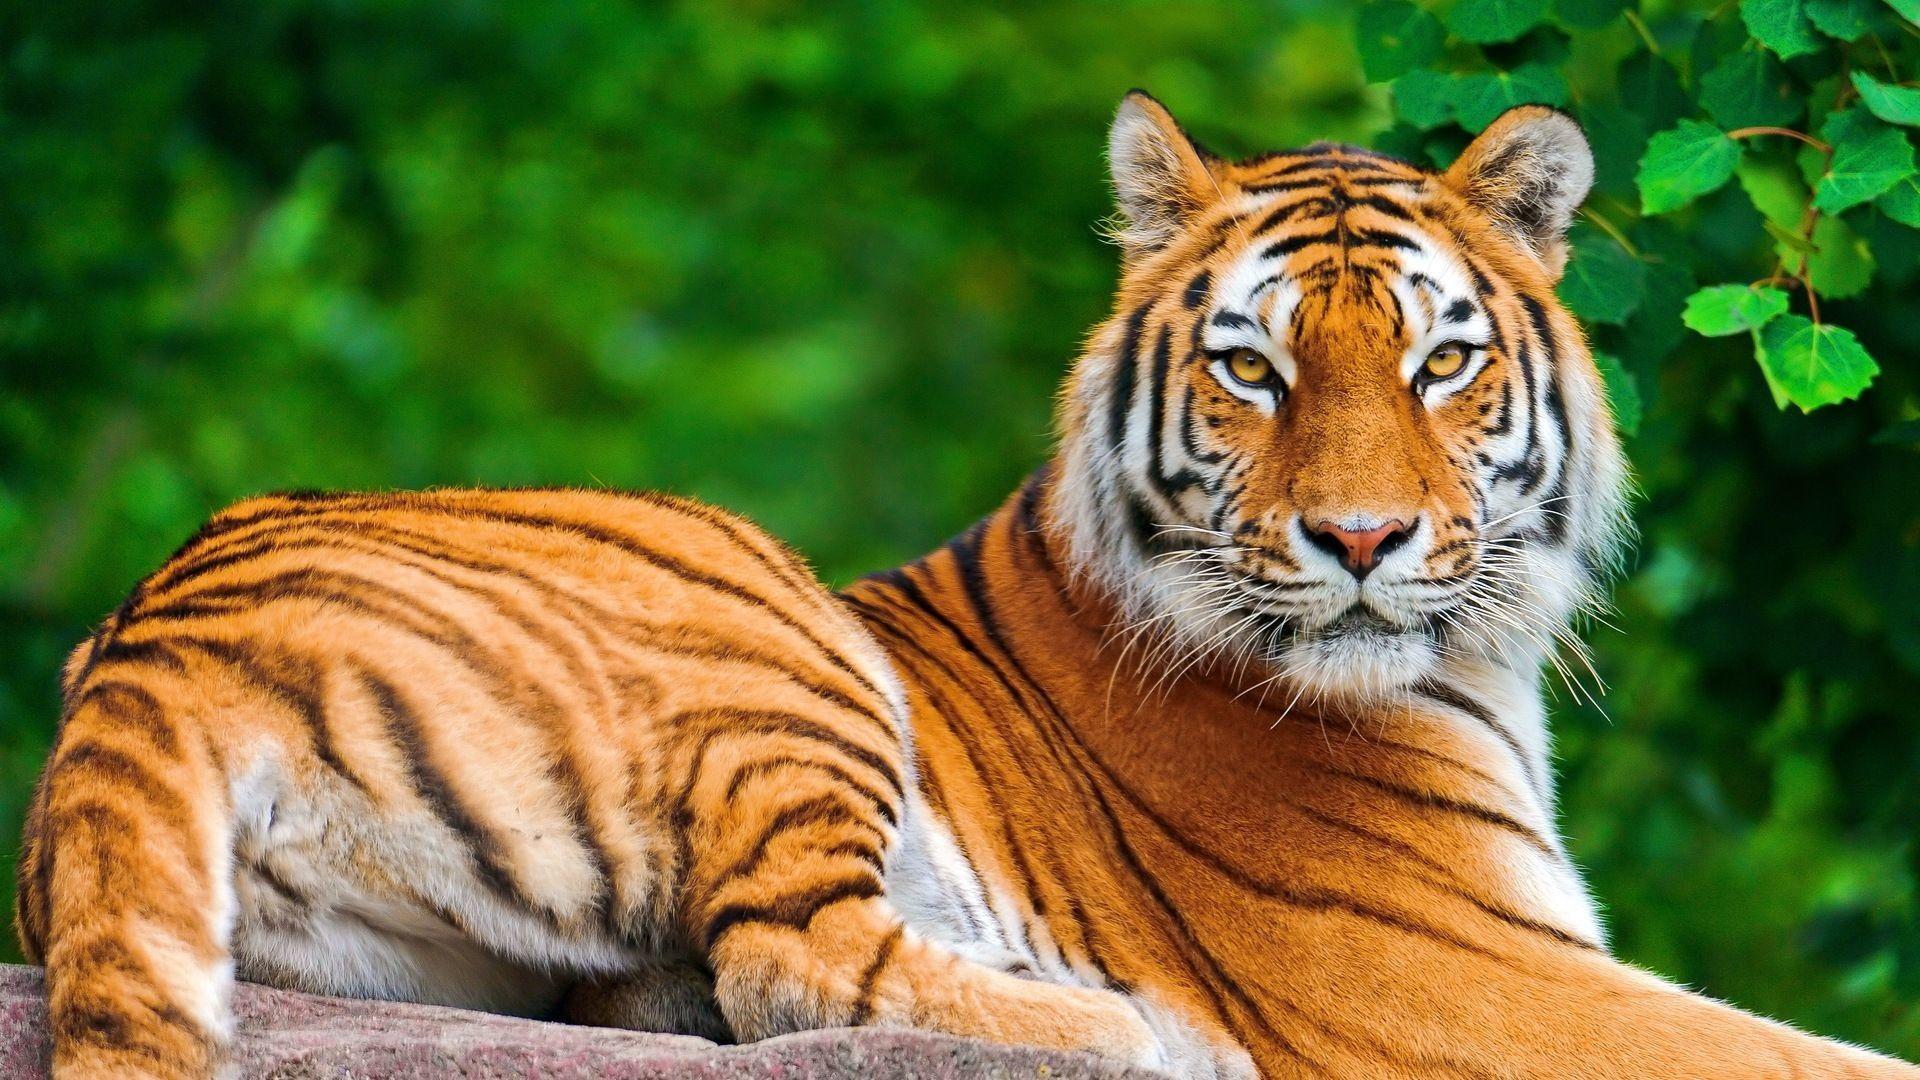 90203 Bengal Tiger Images Stock Photos  Vectors  Shutterstock